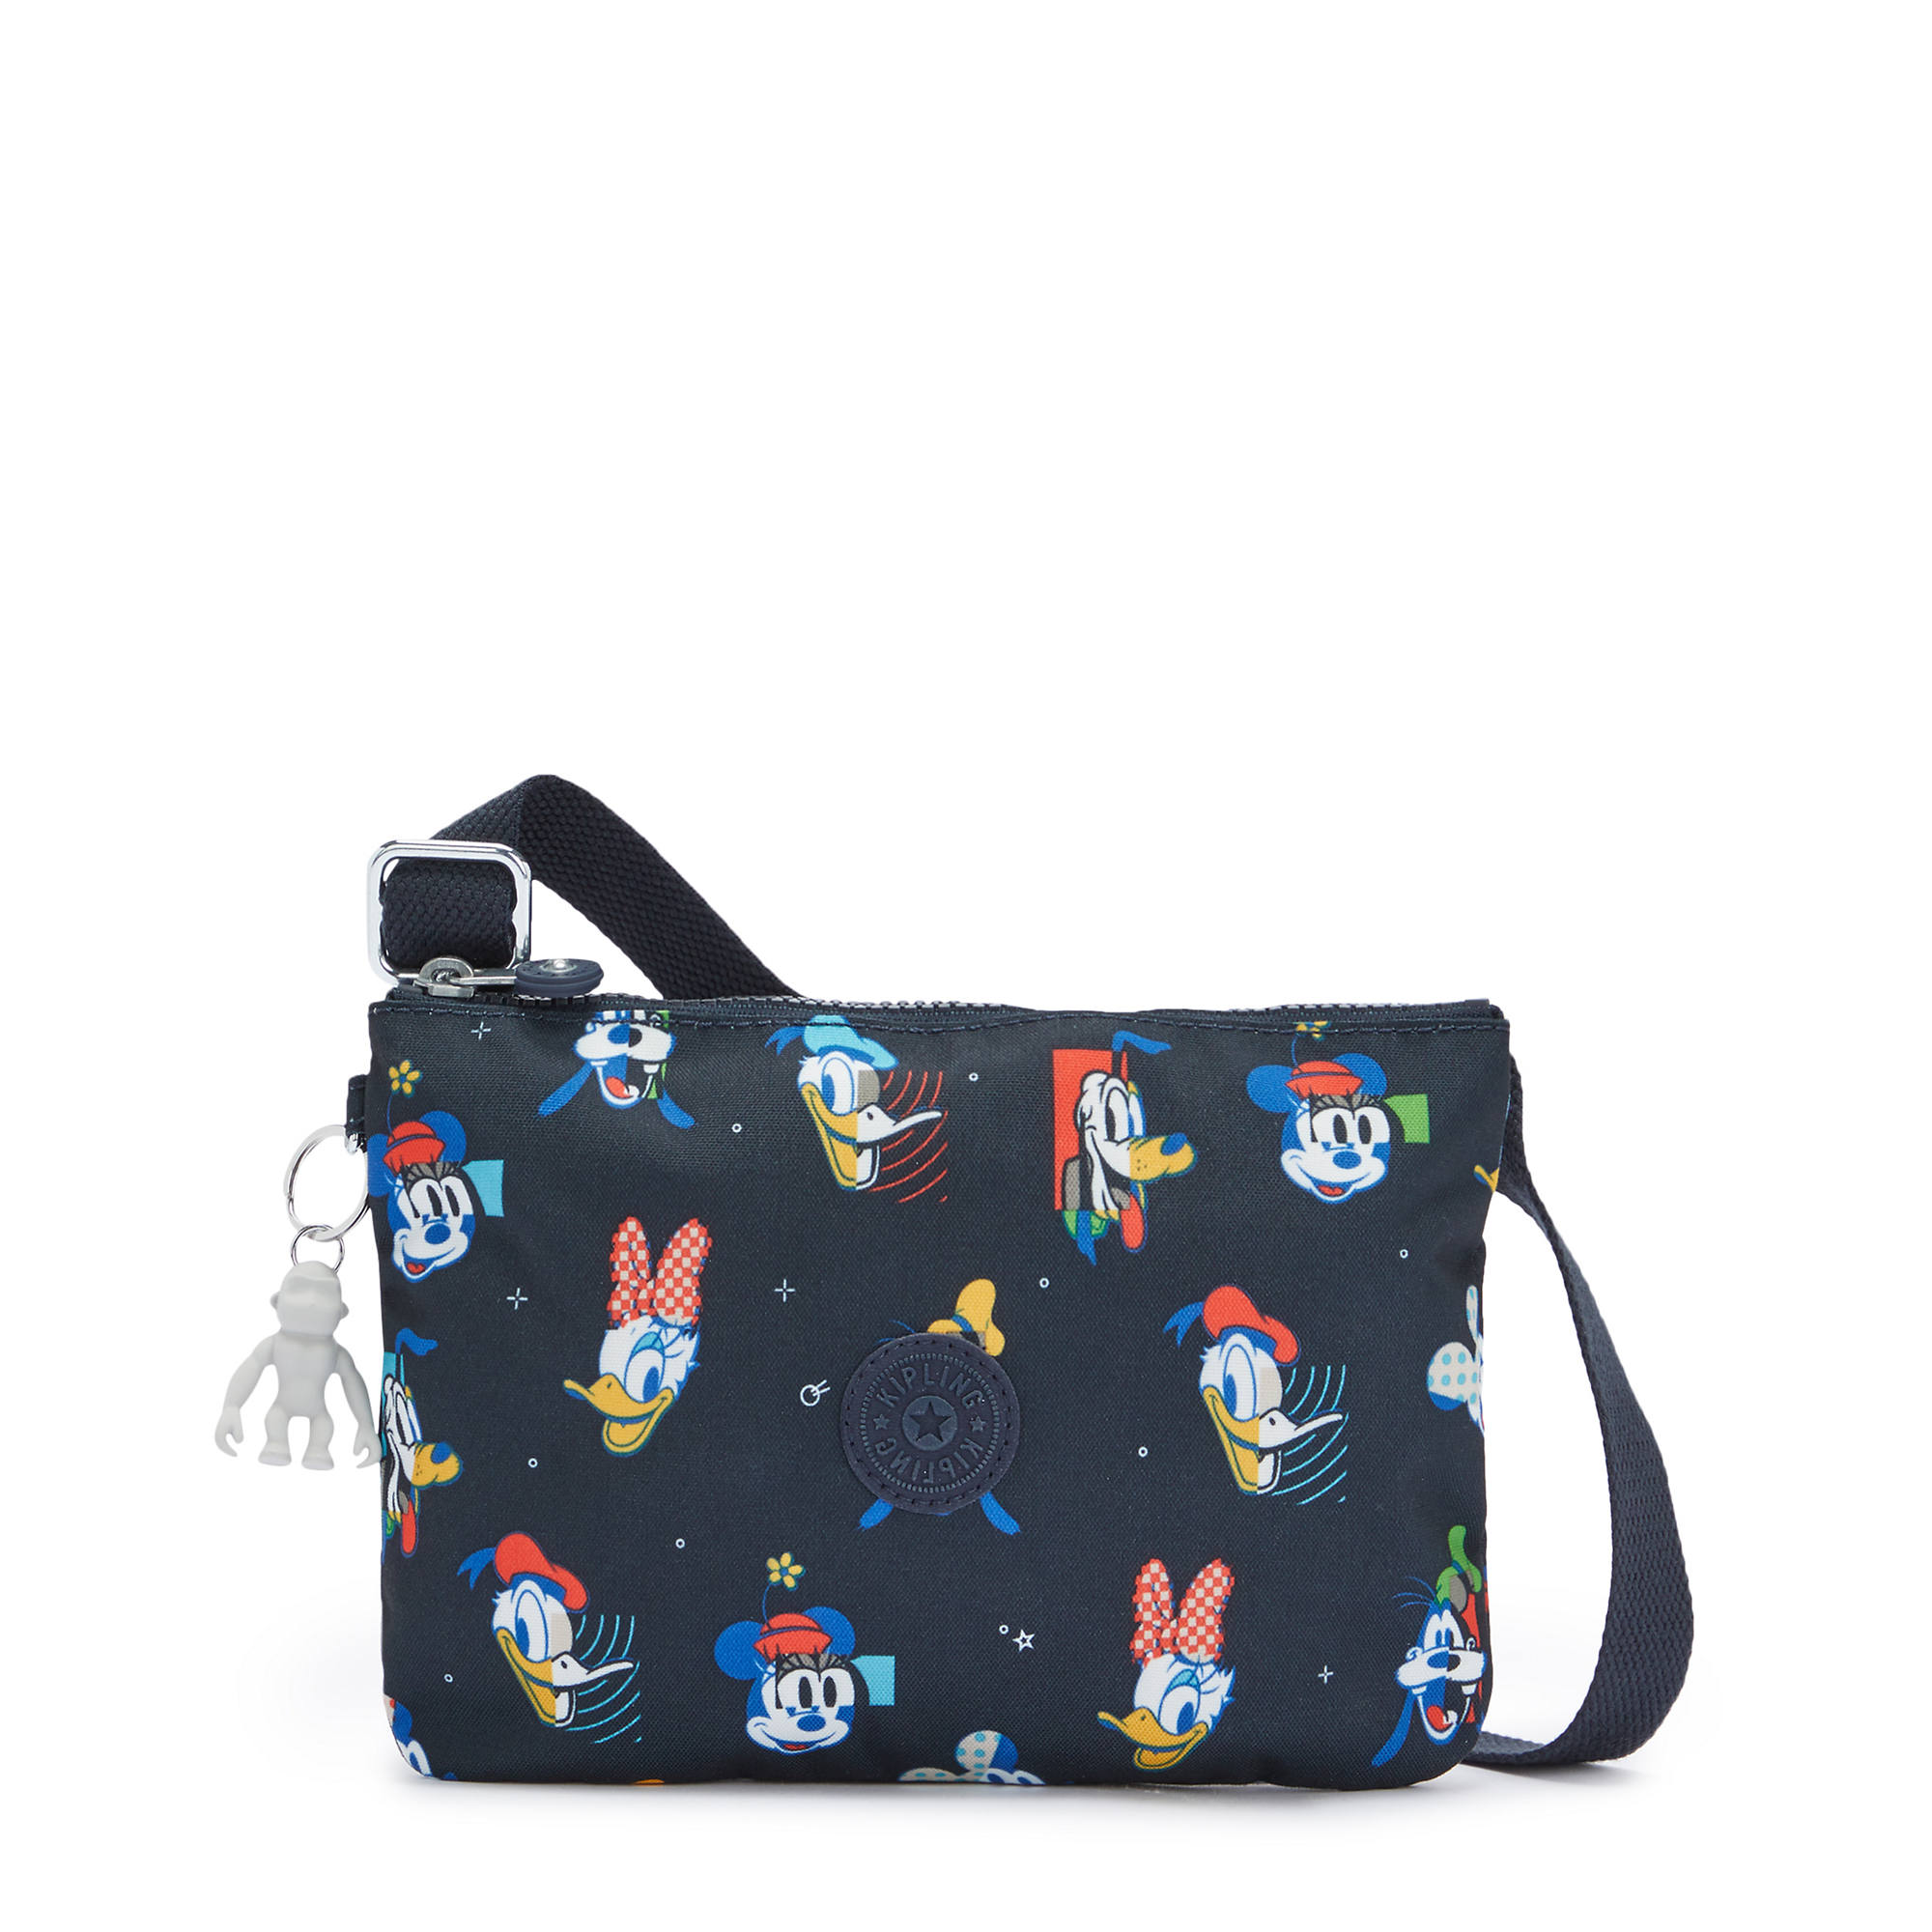 Kipling Disney's Mickey & Friends Raina Crossbody Bag Team Mickey | eBay